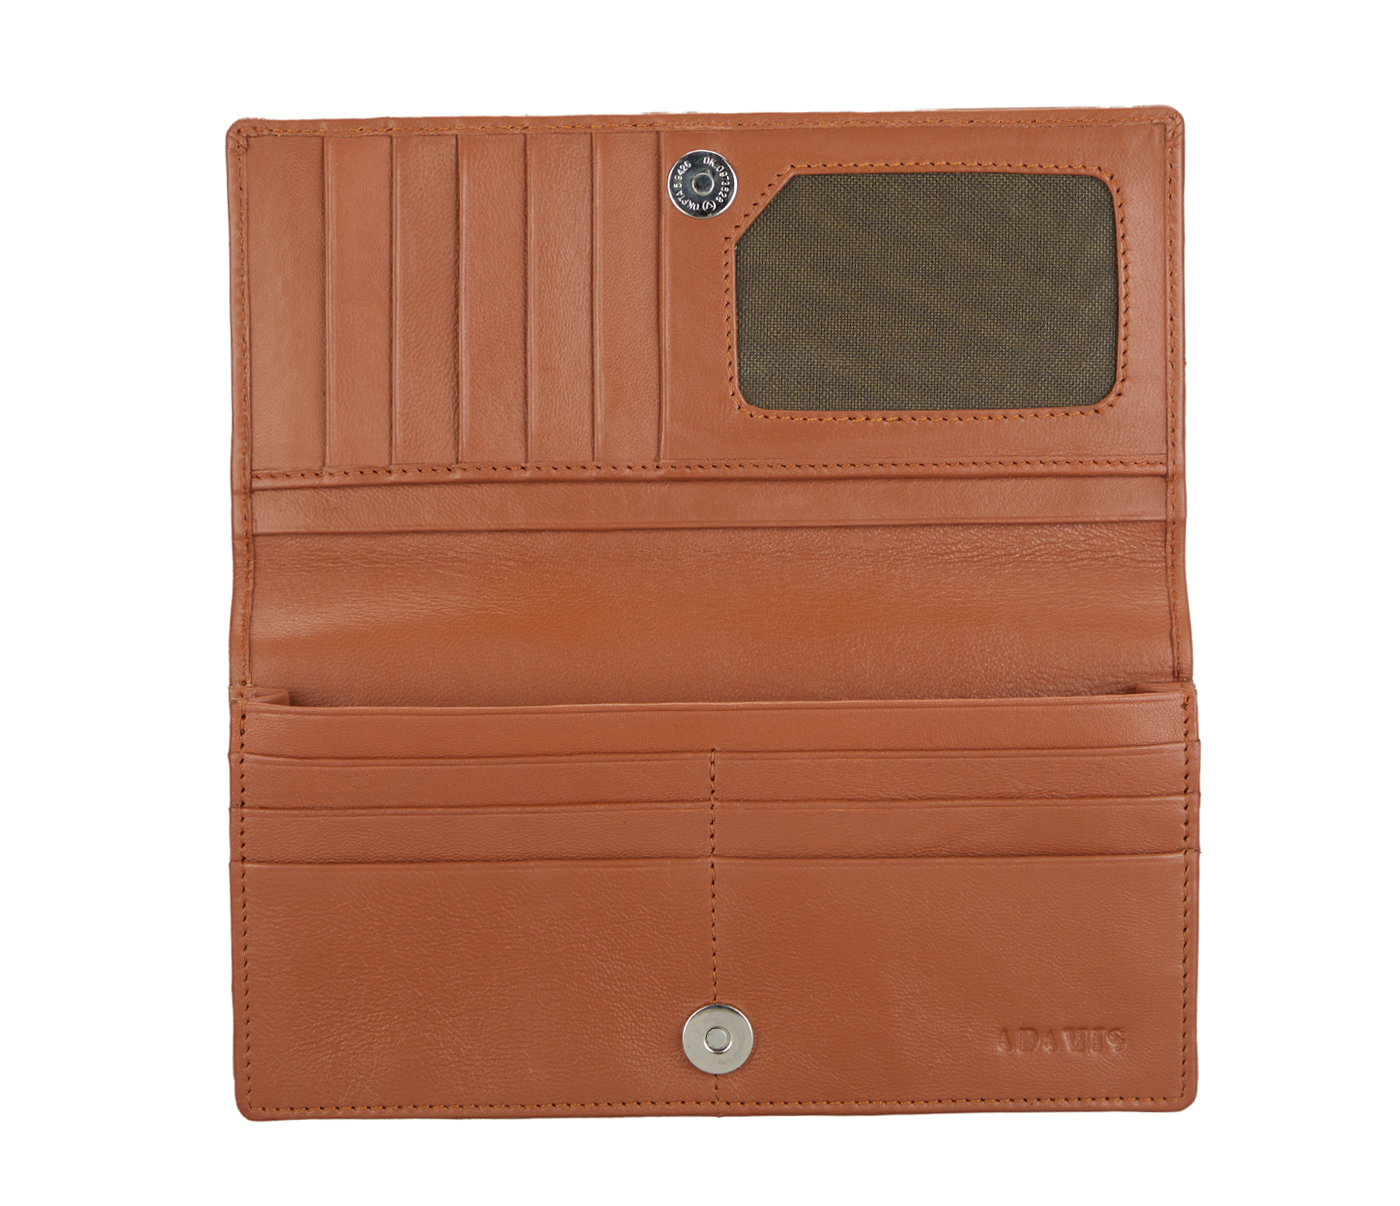 Wallet-Olive-Women's wallet cum clutch in Genuine Leather - Tan